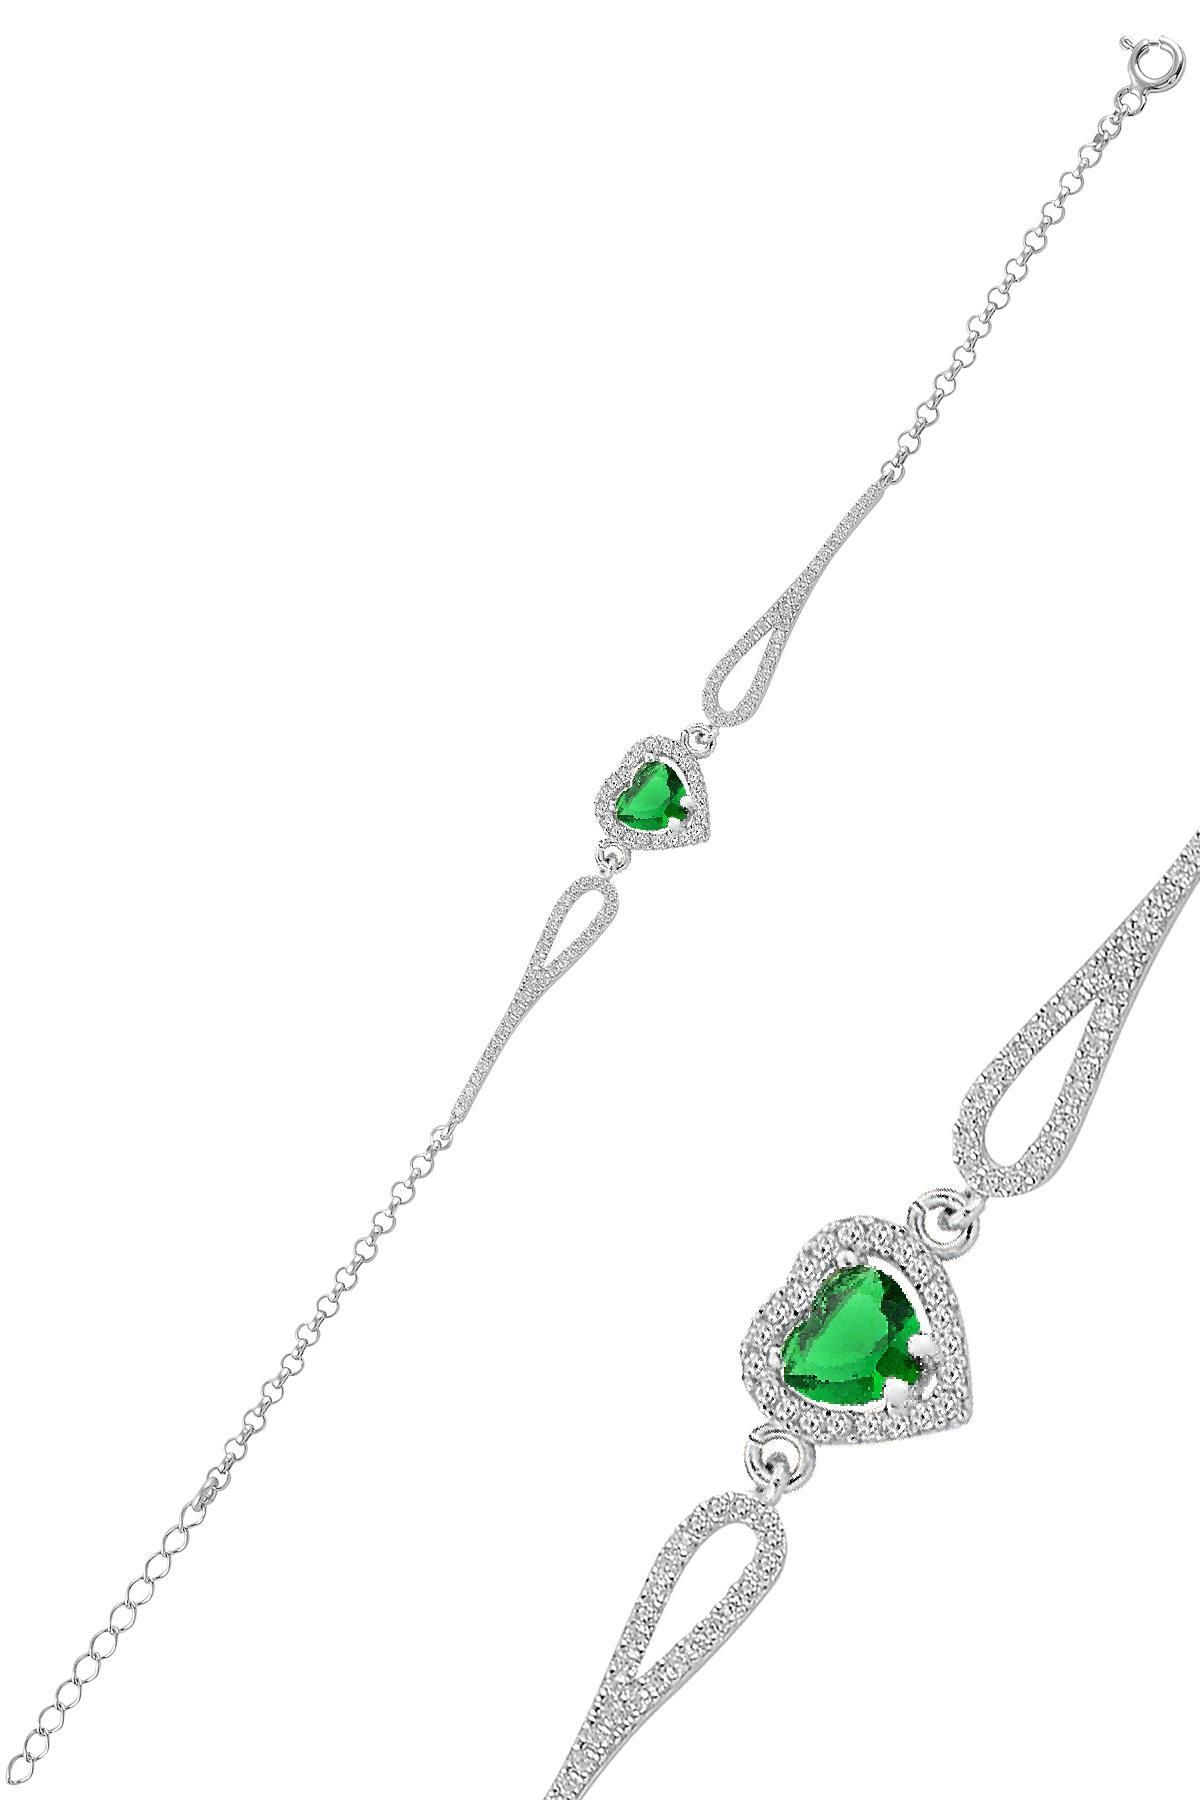 Söğütlü Silver Gümüş rodyumlu yeşil taşlı pırlanta modeli kalp bileklik SGTL12272YESIL